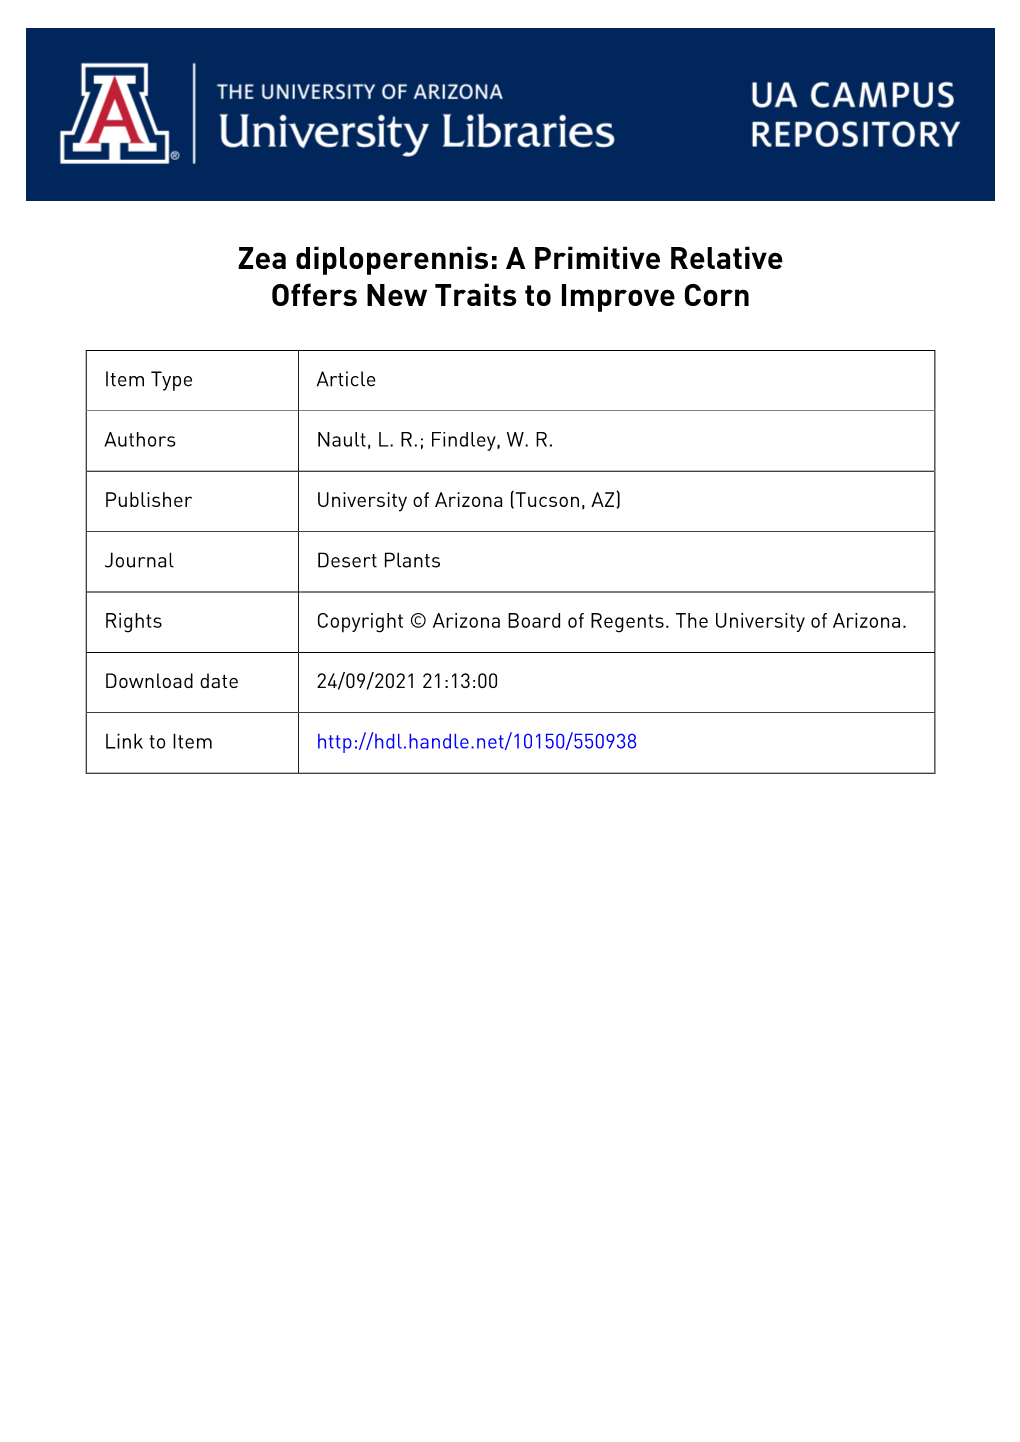 Zea Diploperennis: to Improve Corn1